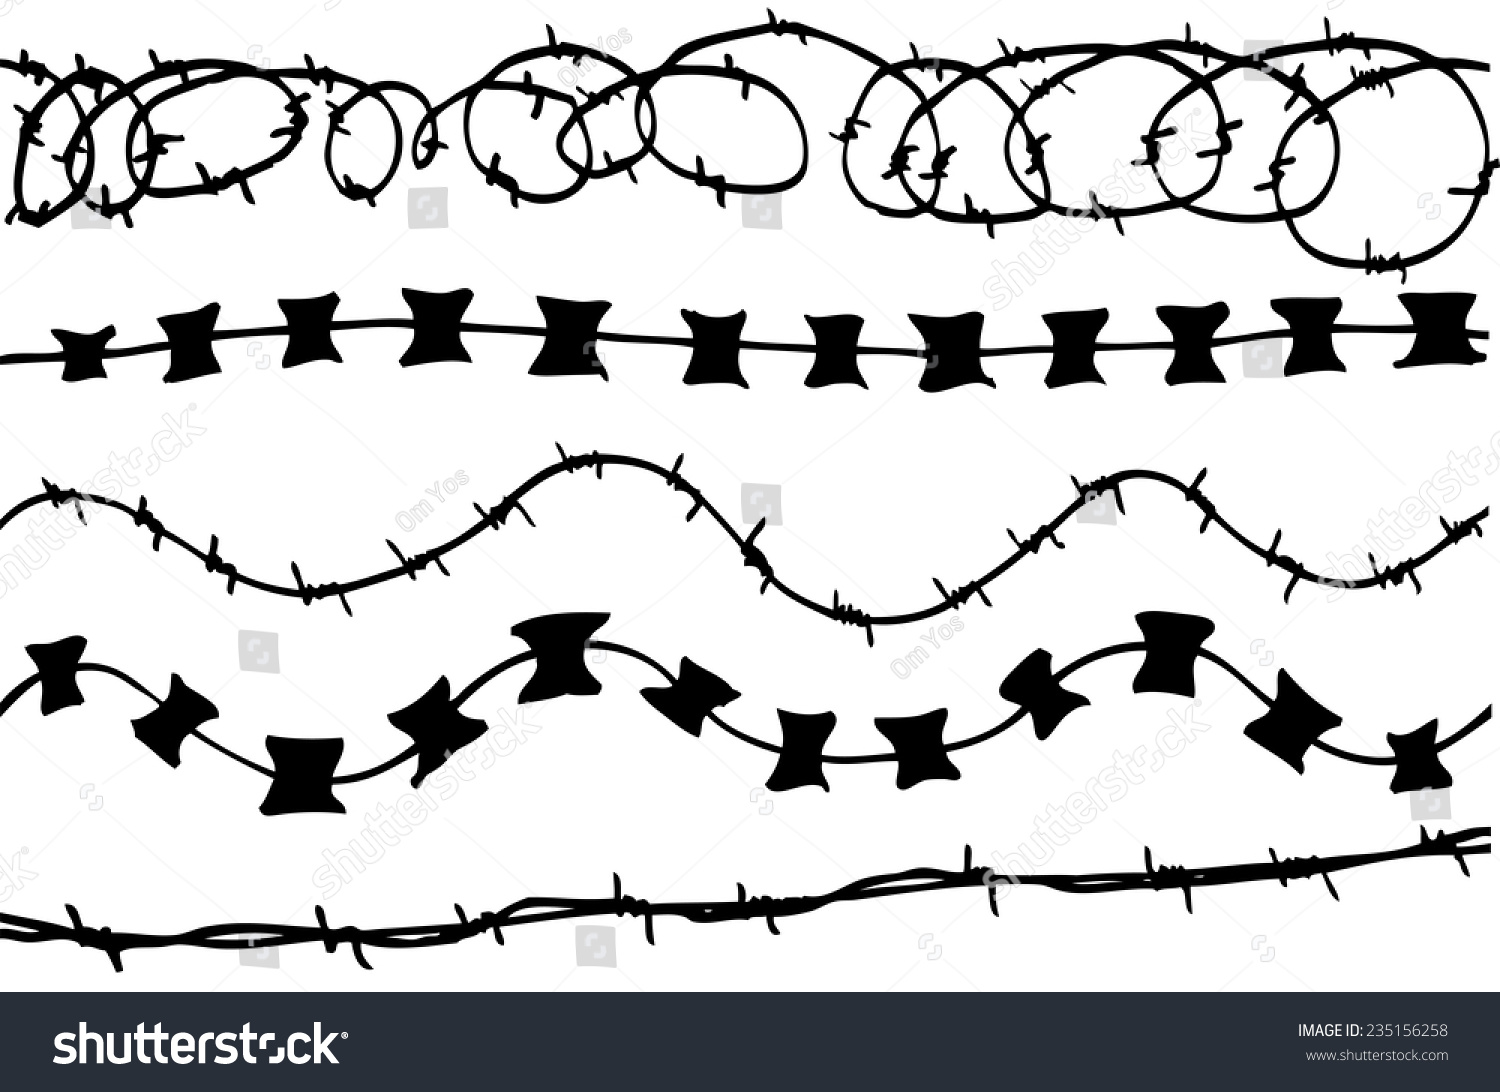 Hand Draw Sketch Five Barbed Wire: стоковая векторная графика (без лицензио...